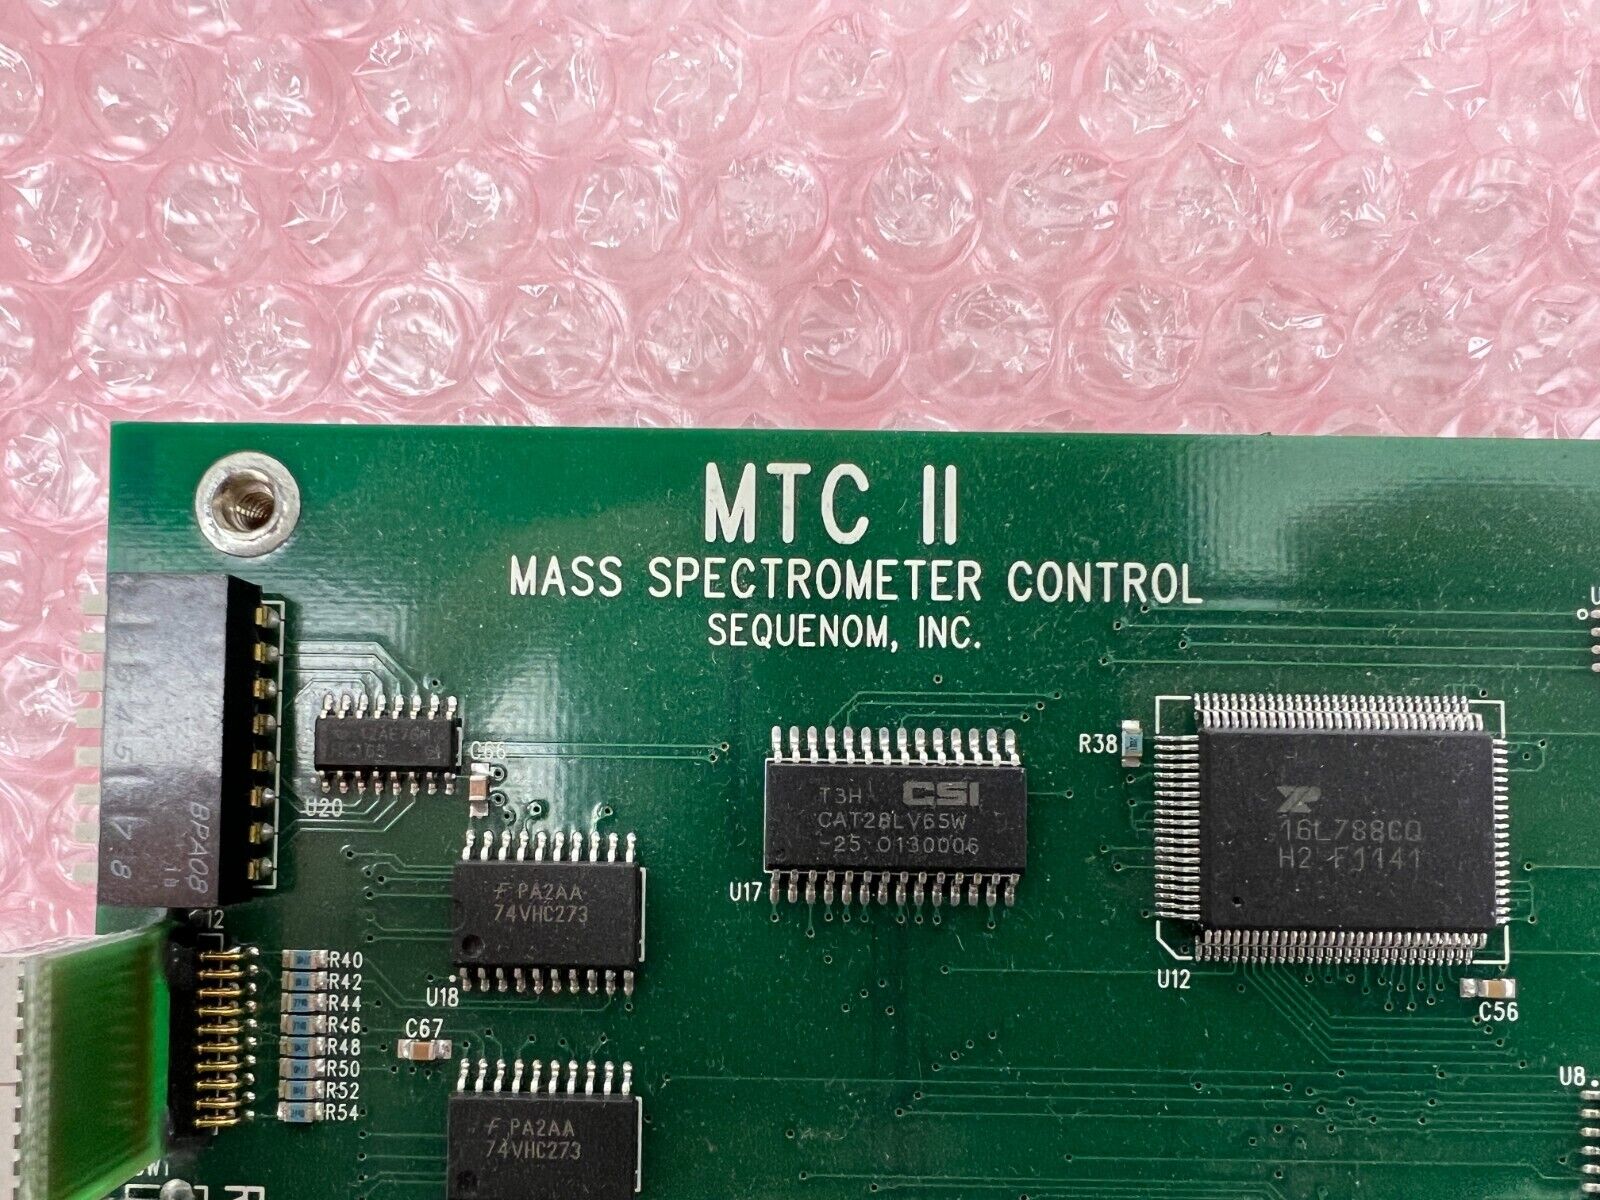 Sequenom Agena Biosciences Bruker MT9 MTC 2 Mass Spectrometer Control Board